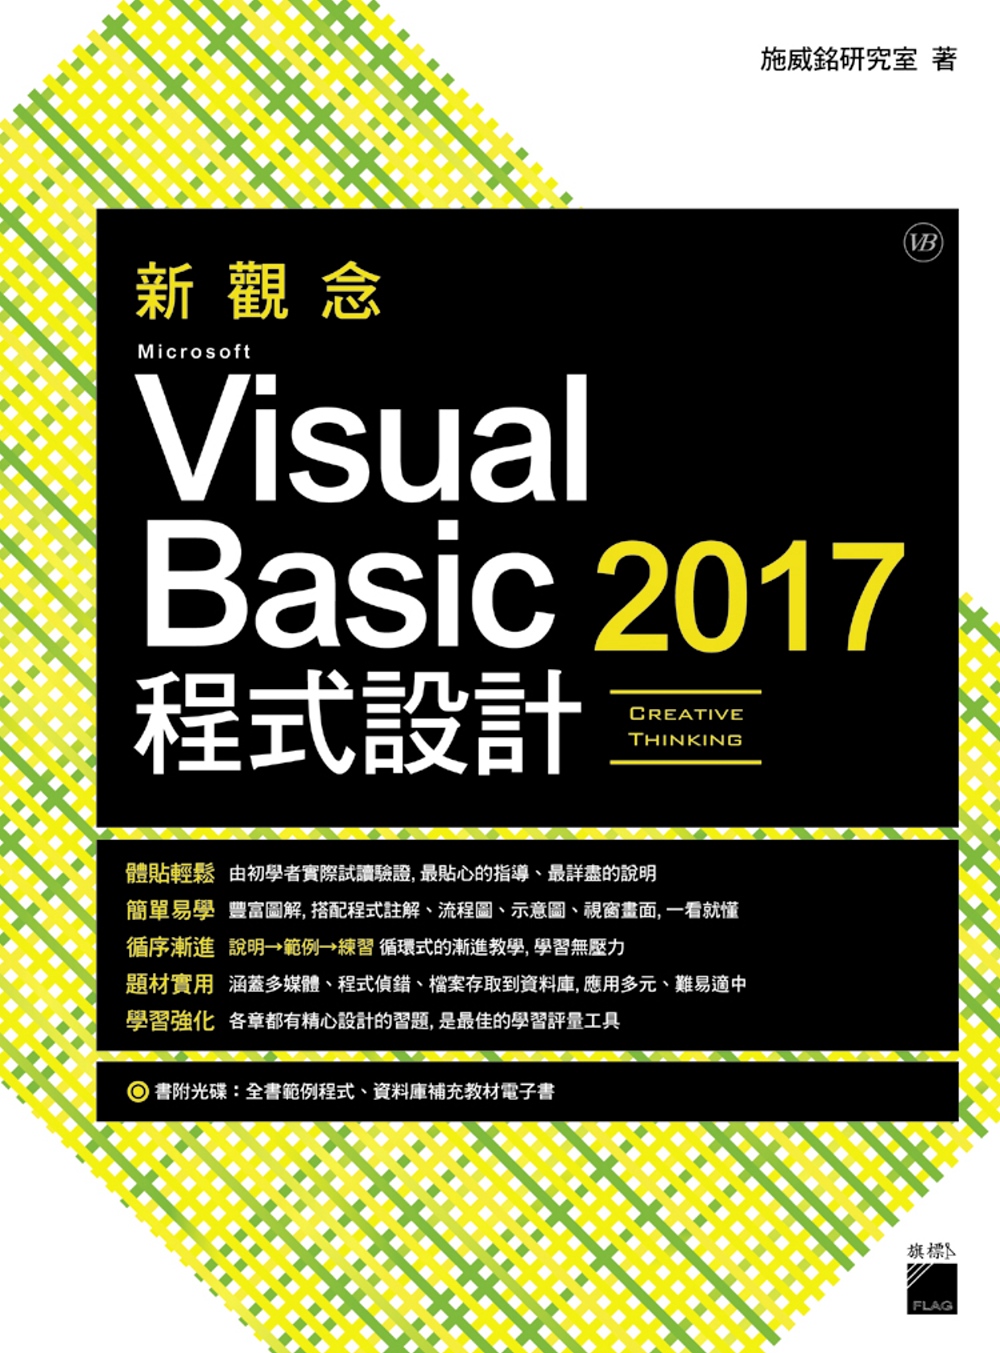 新觀念 Microsoft Visual Basic 2017 程式設計